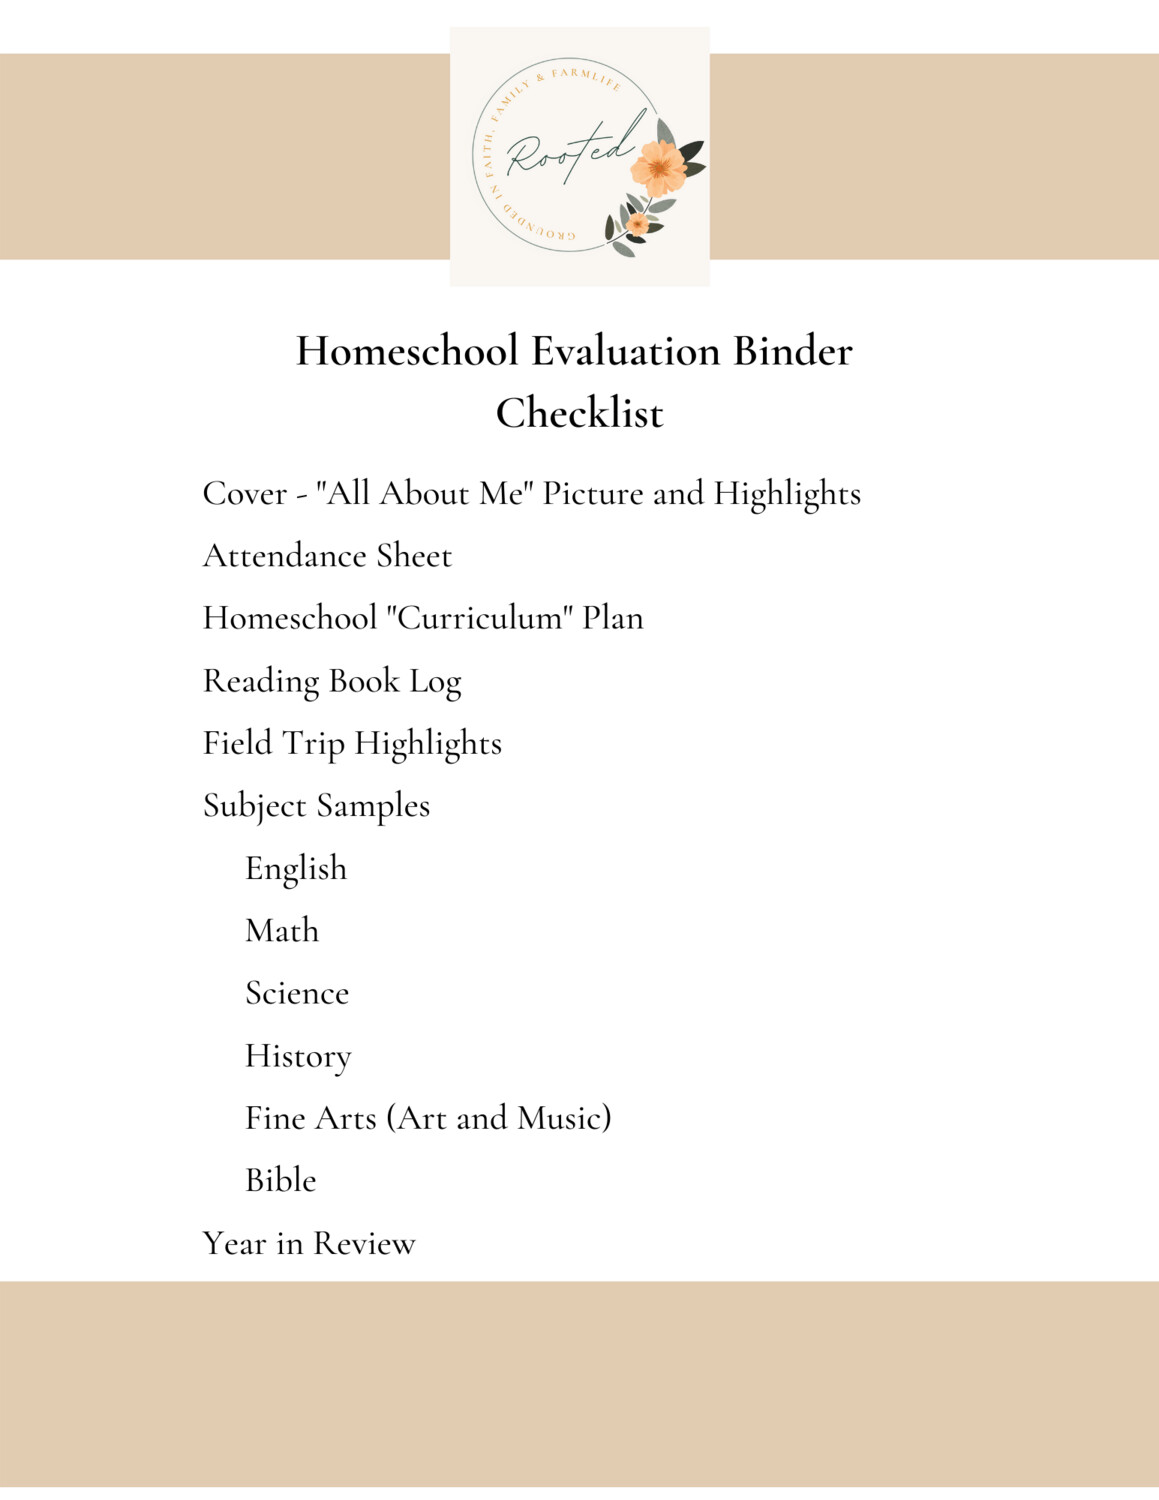 Homeschool Evaluator Binder Checklist